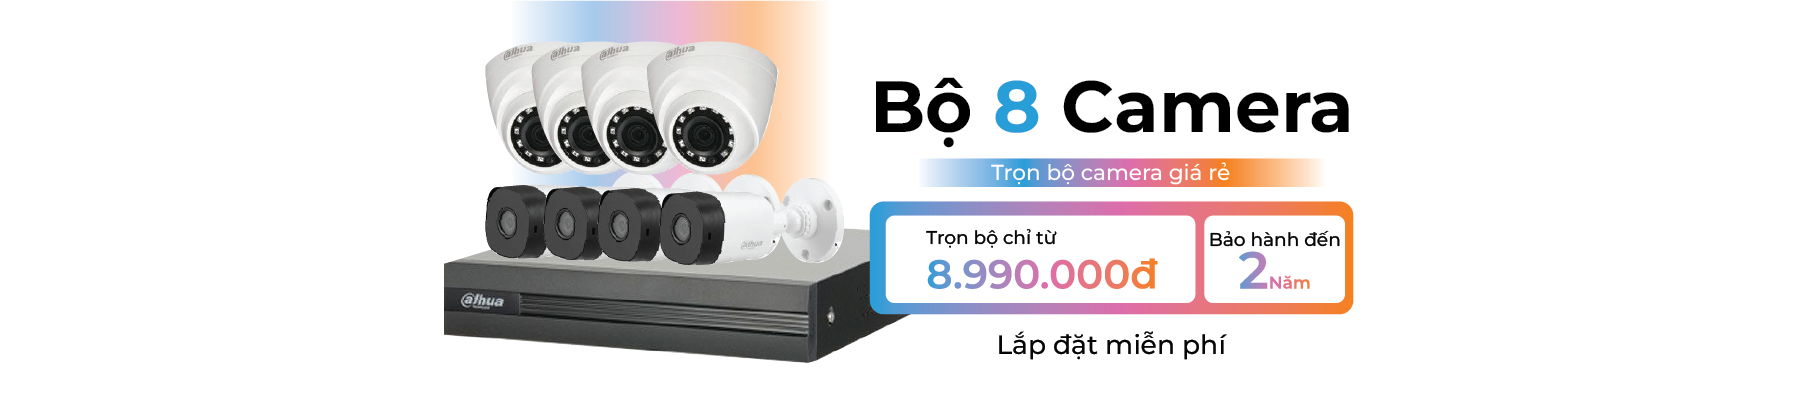 tron-bo-8-camera